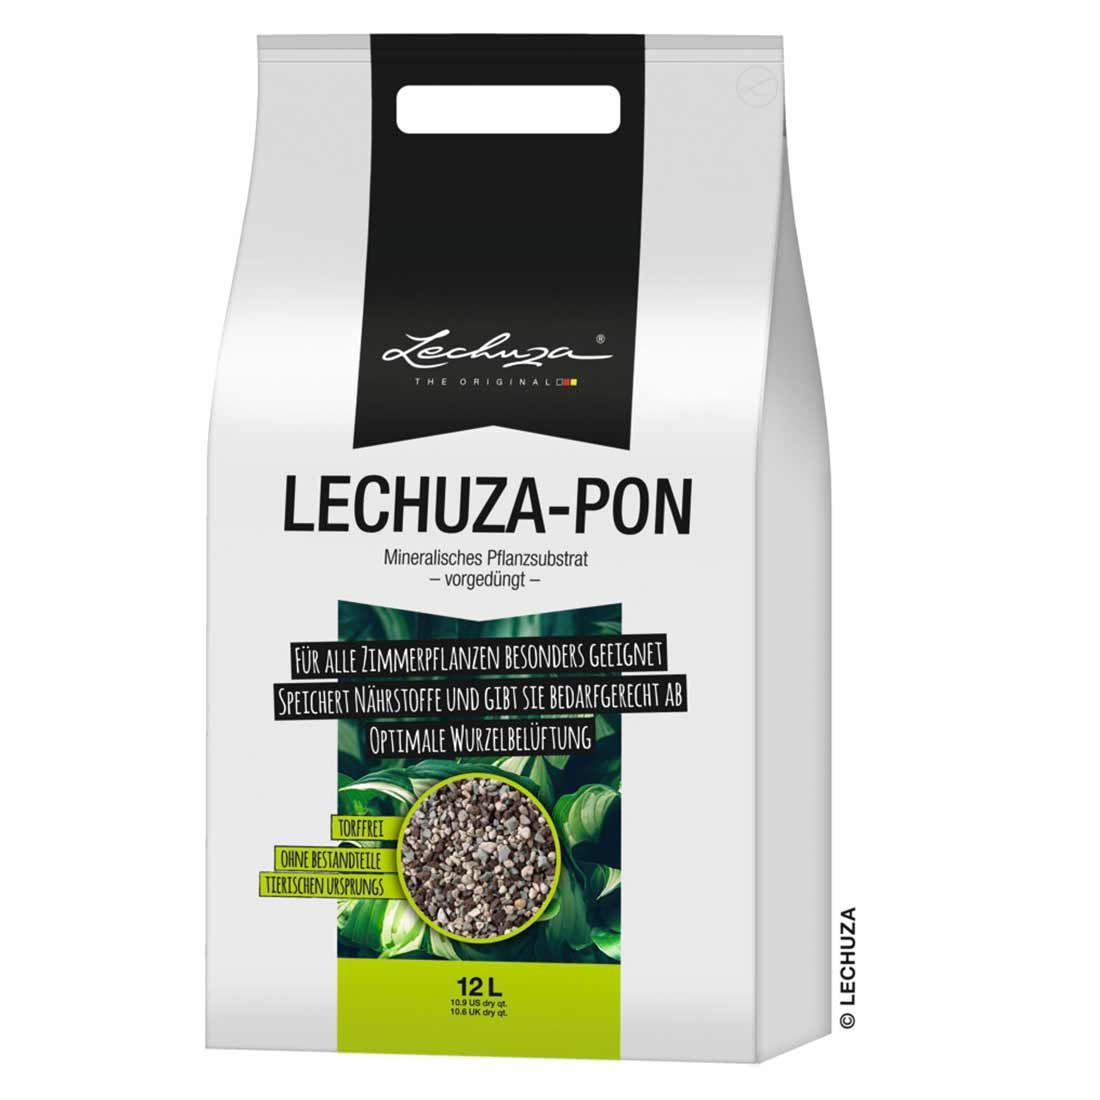 Lechuza Pon Pflanzsubstrat 12 Liter